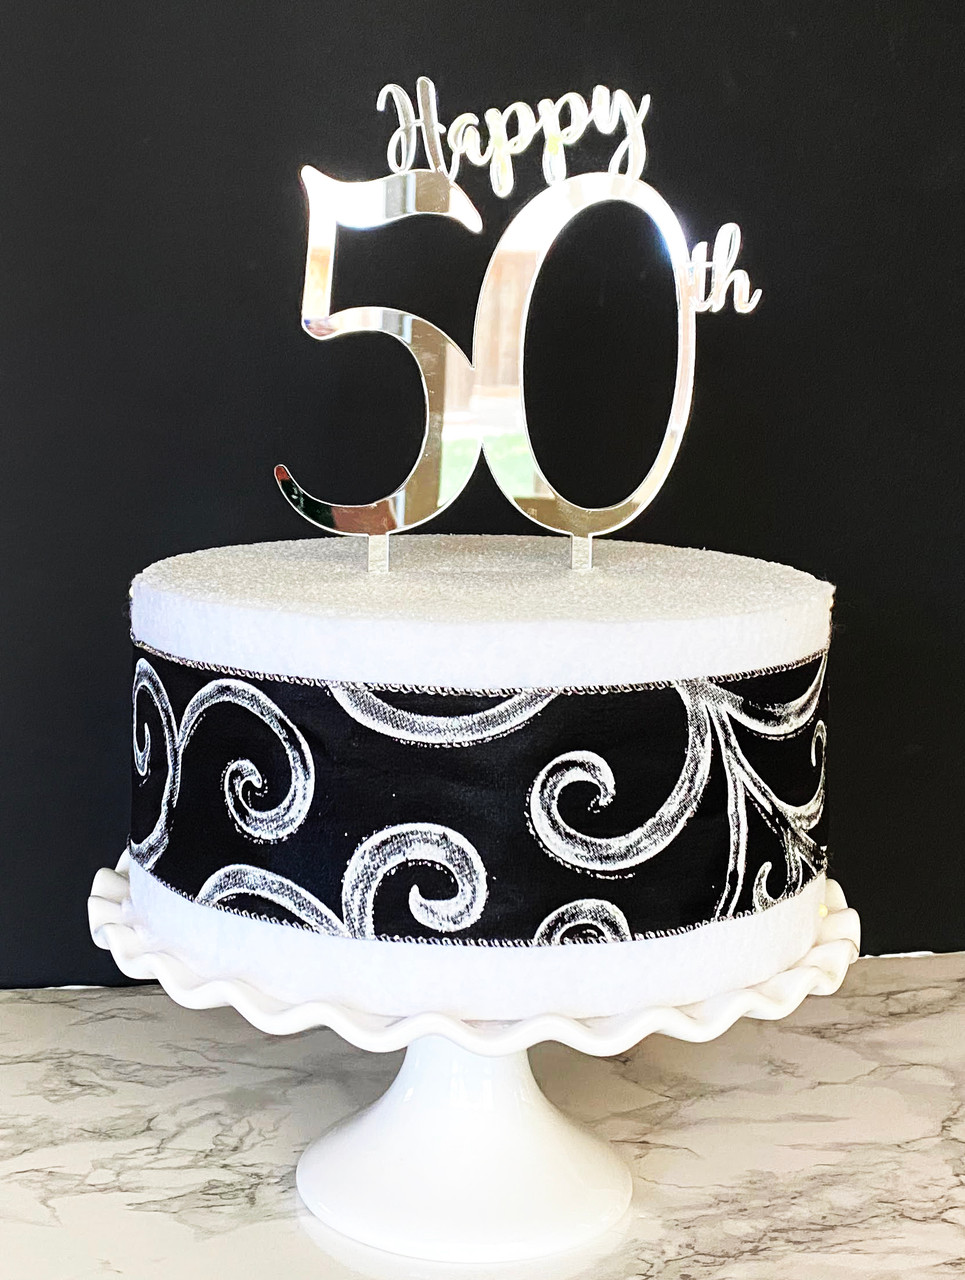 Pretty Cake Ideas For Every Celebration : 50th birthday